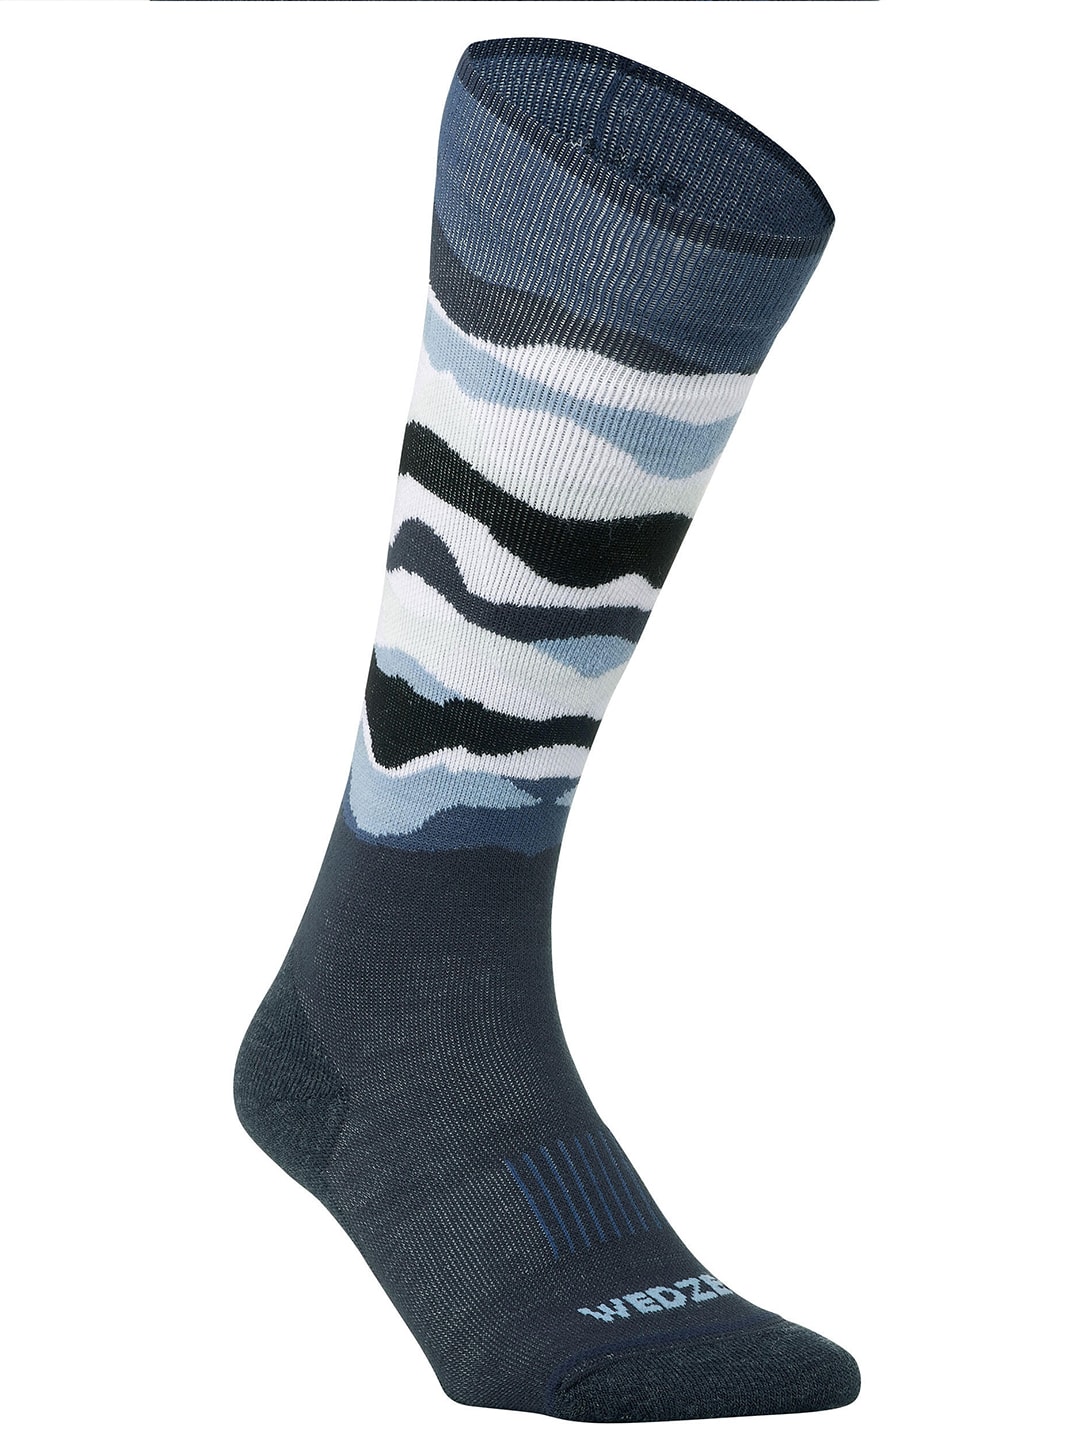 WEDZE By Decathlon Unisex Grey Colourblocked Ski Socks Price in India